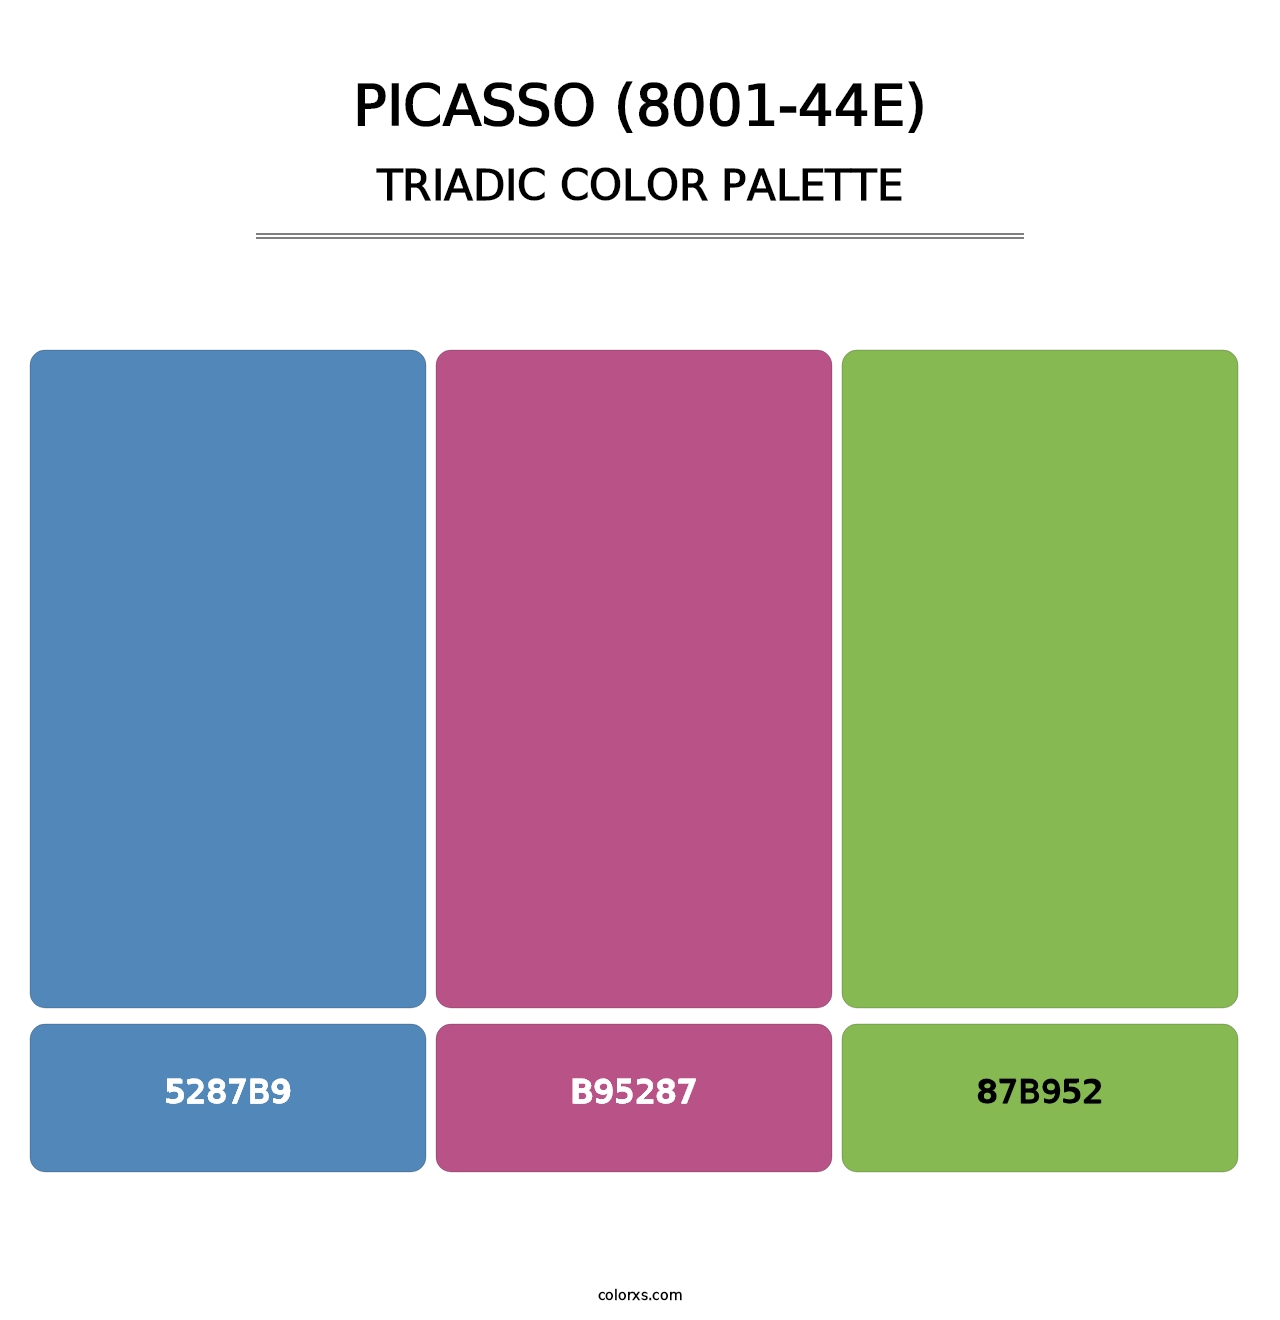 Picasso (8001-44E) - Triadic Color Palette